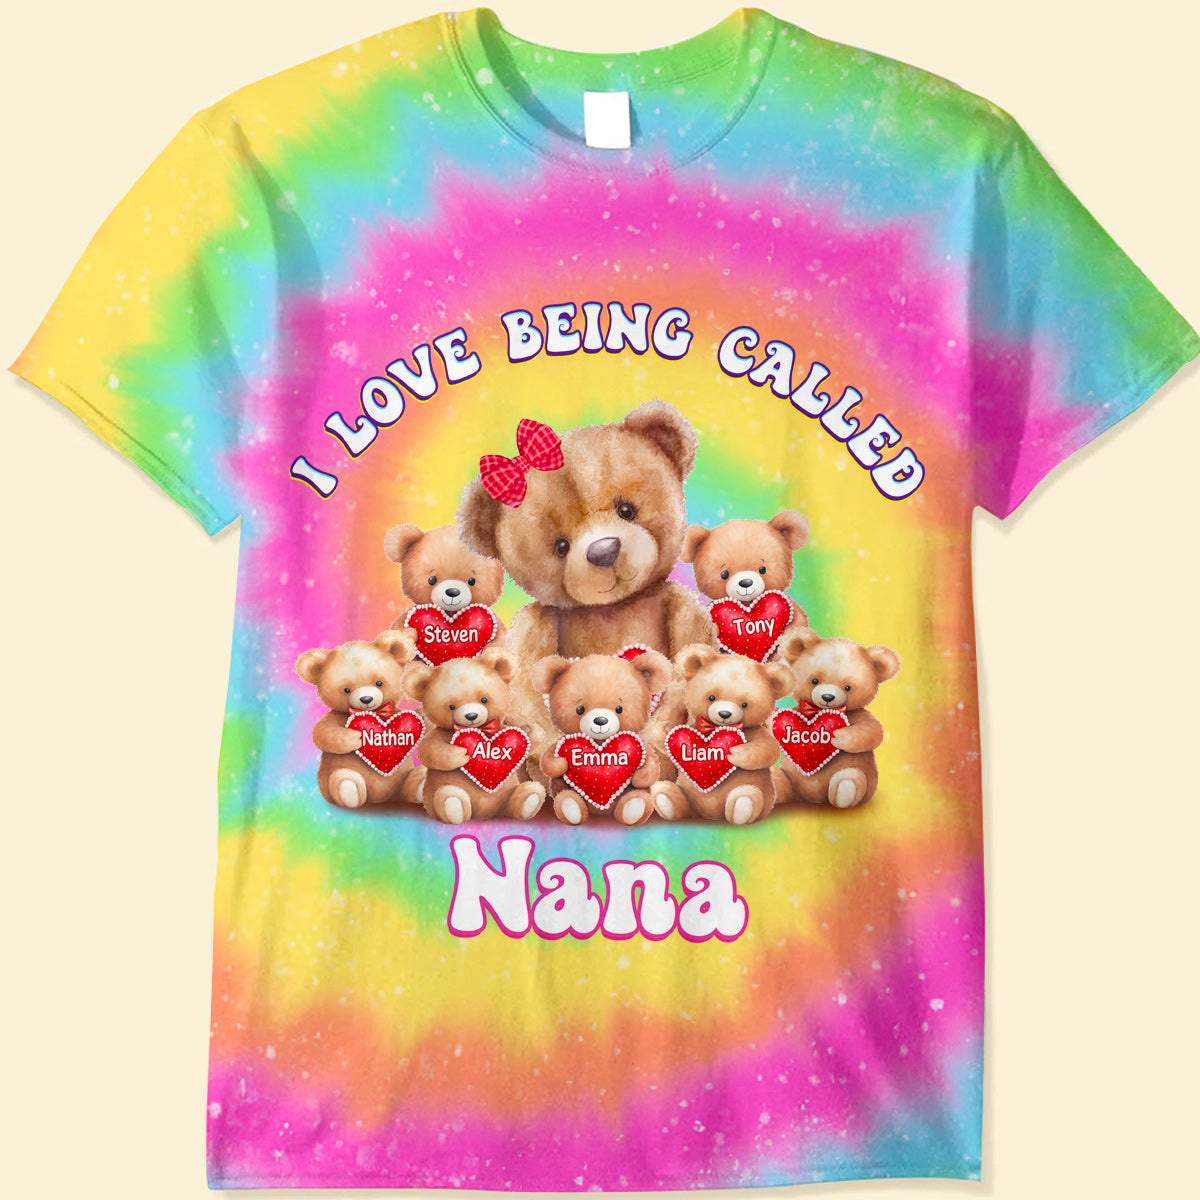 Grandma Bear I Love Being Called Grandma Personalized 3D T-shirt VTX20MAR24CT1